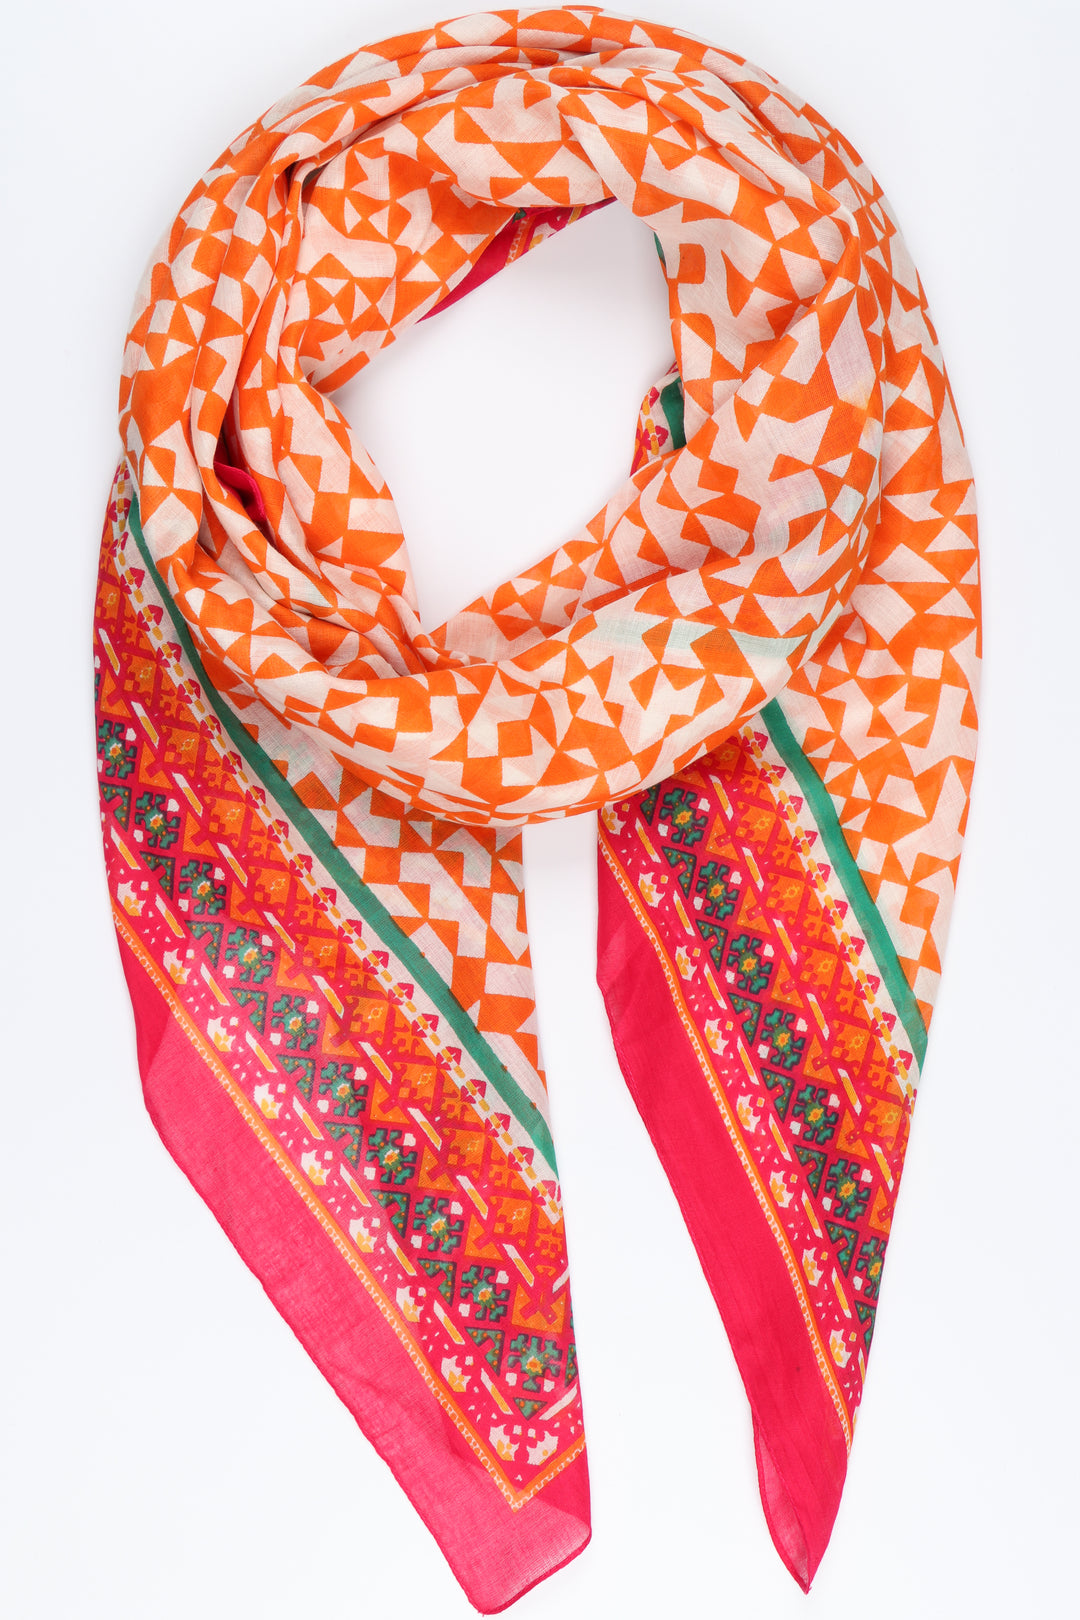 orange mosaic print cotton scarf with pink patterned border trim